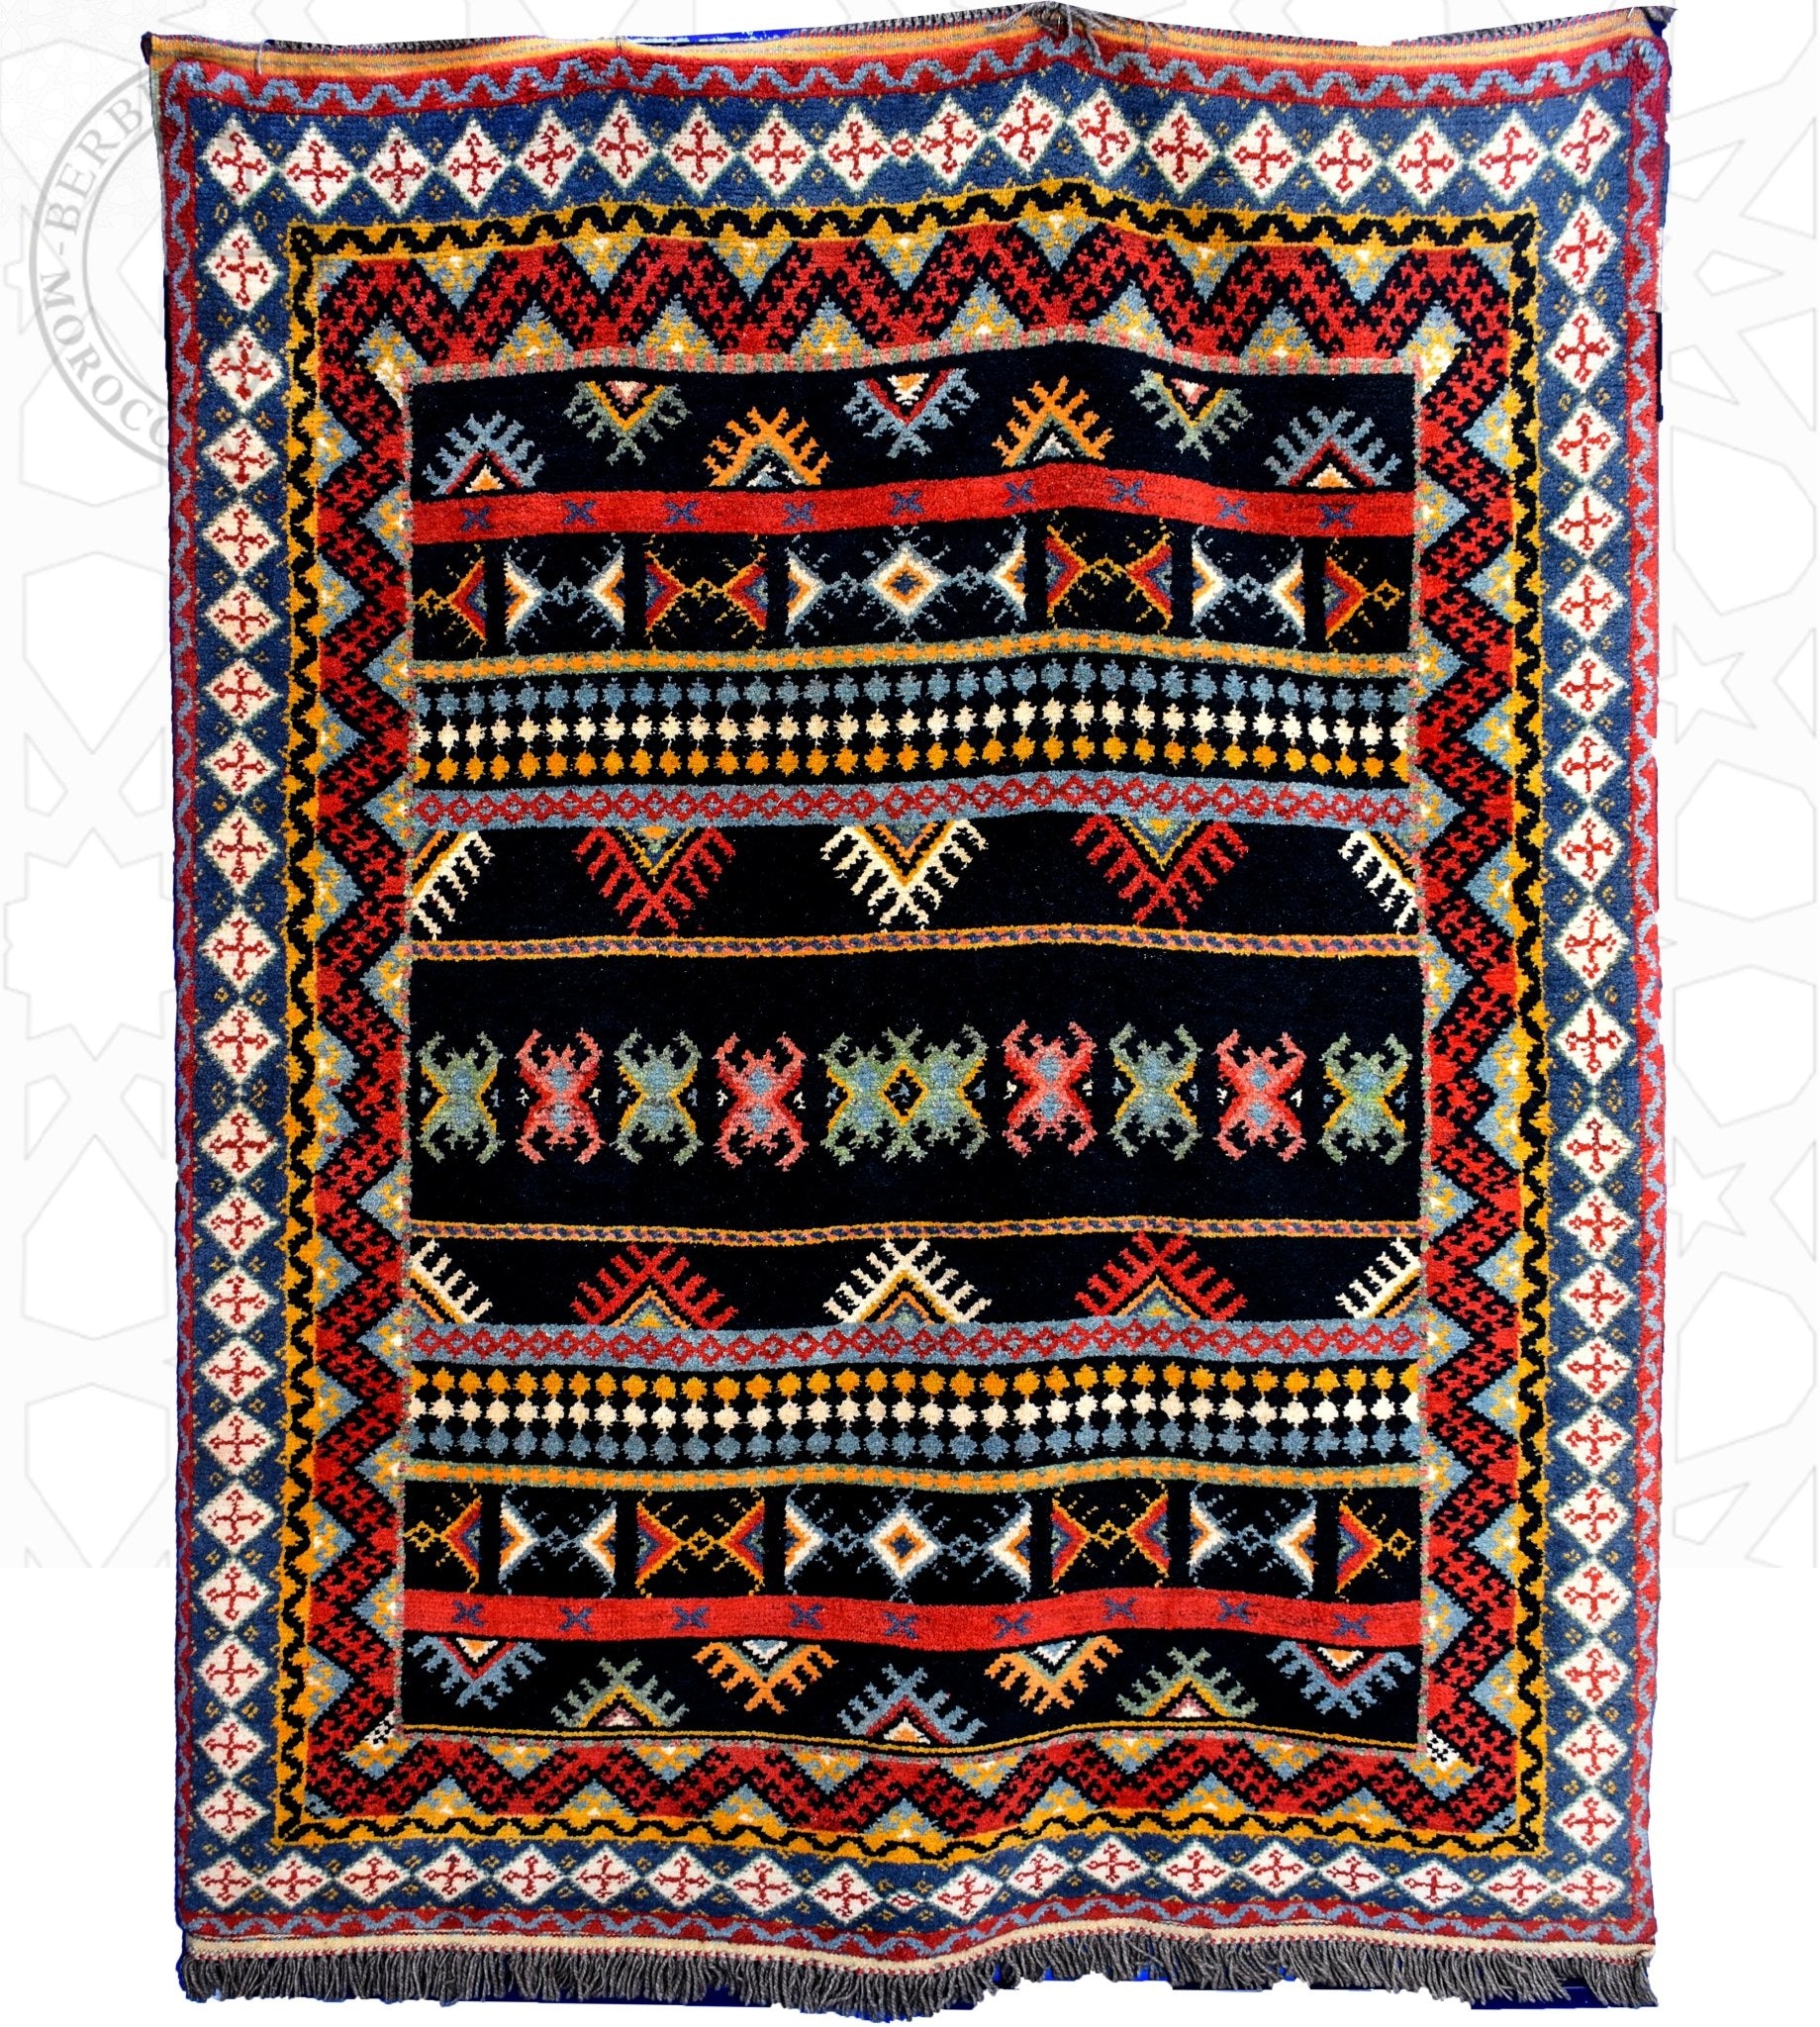 gøre det muligt for parti flicker Taznakht Black and Red Moroccan rug - 5.25 x 7.55 ft / 160 x 230 cm -  Berbers Market